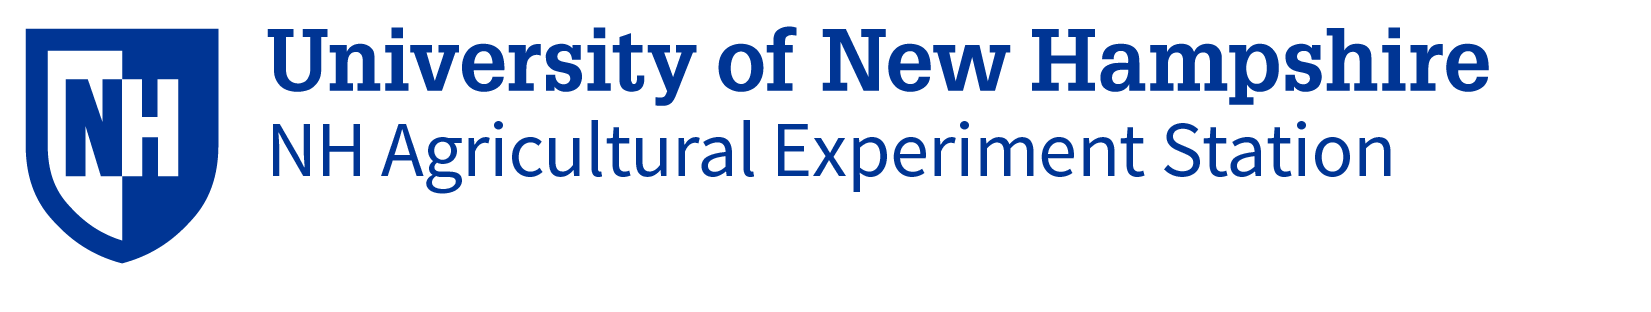 NHAES logo, horizontal blue